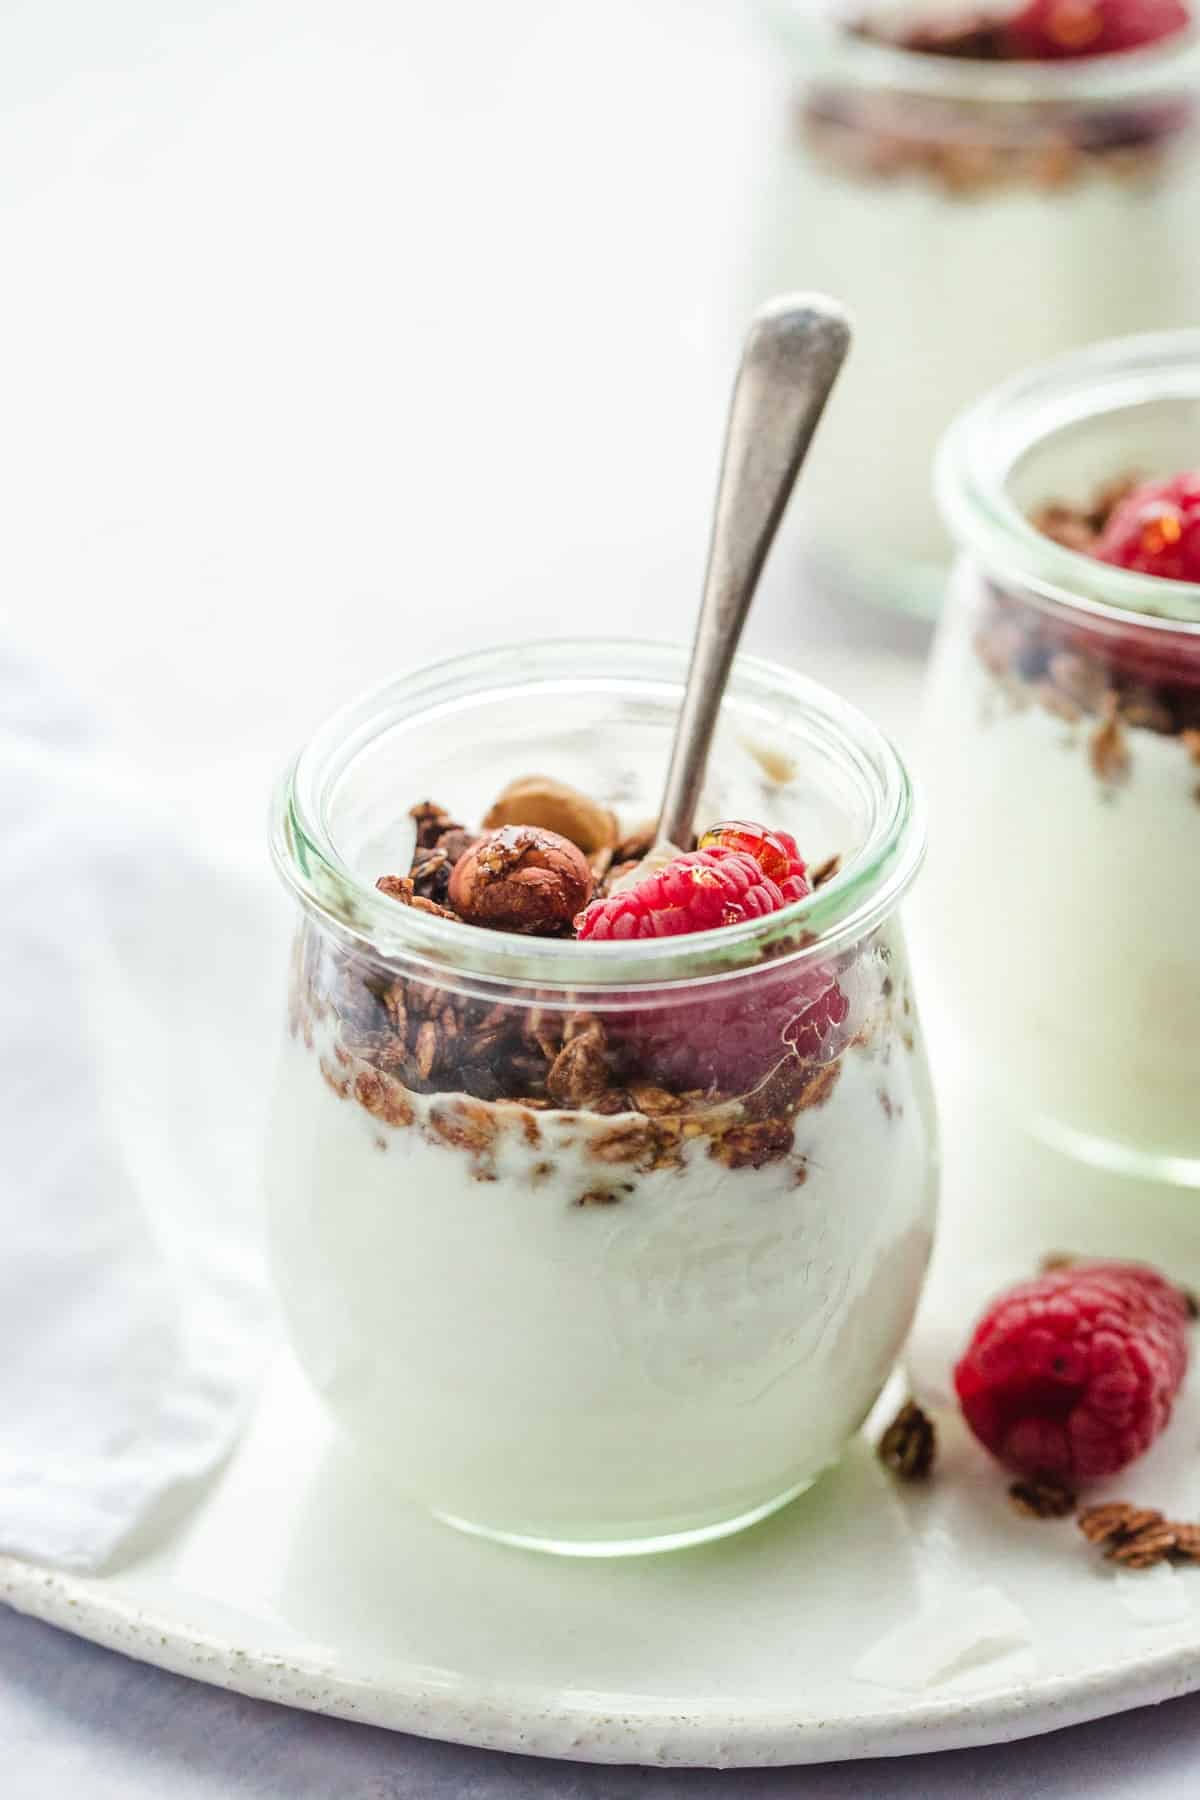 A small Weck jar with yogurt, granola, nuts, raspberries.